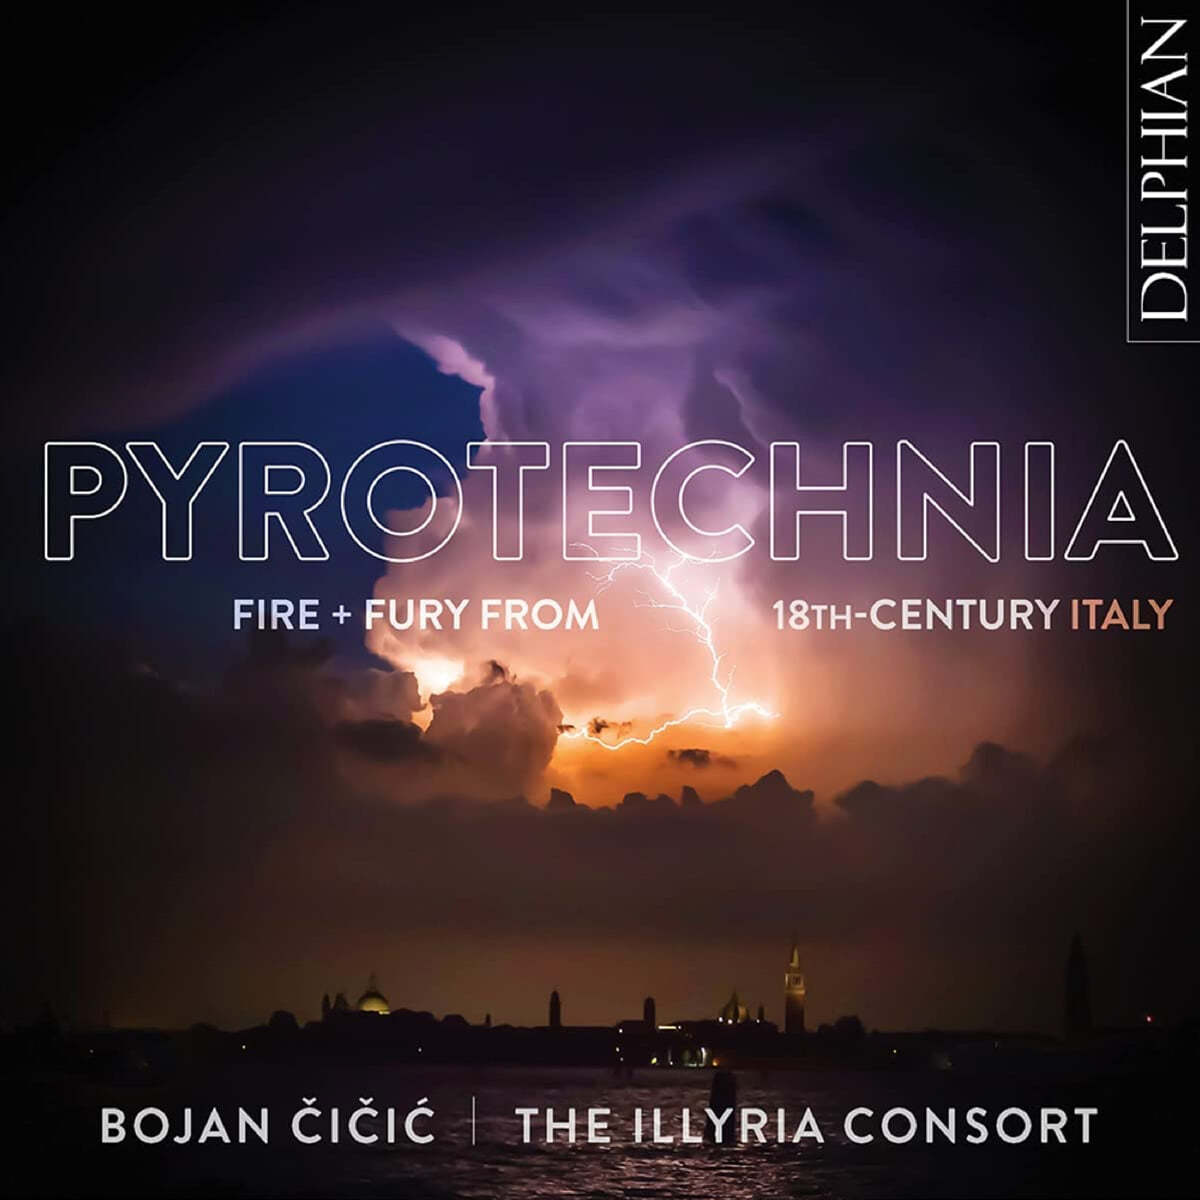 Bojan Cicic / Illyria Consort 비발디 / 타르티니 / 로카텔리: 바이올린 협주곡 (Vivaldi: Violin Concertos RV205, RV213a / Tartini: Violin Concerto D48 / Locatelli: Violin Concerto Op.3 No.12) 